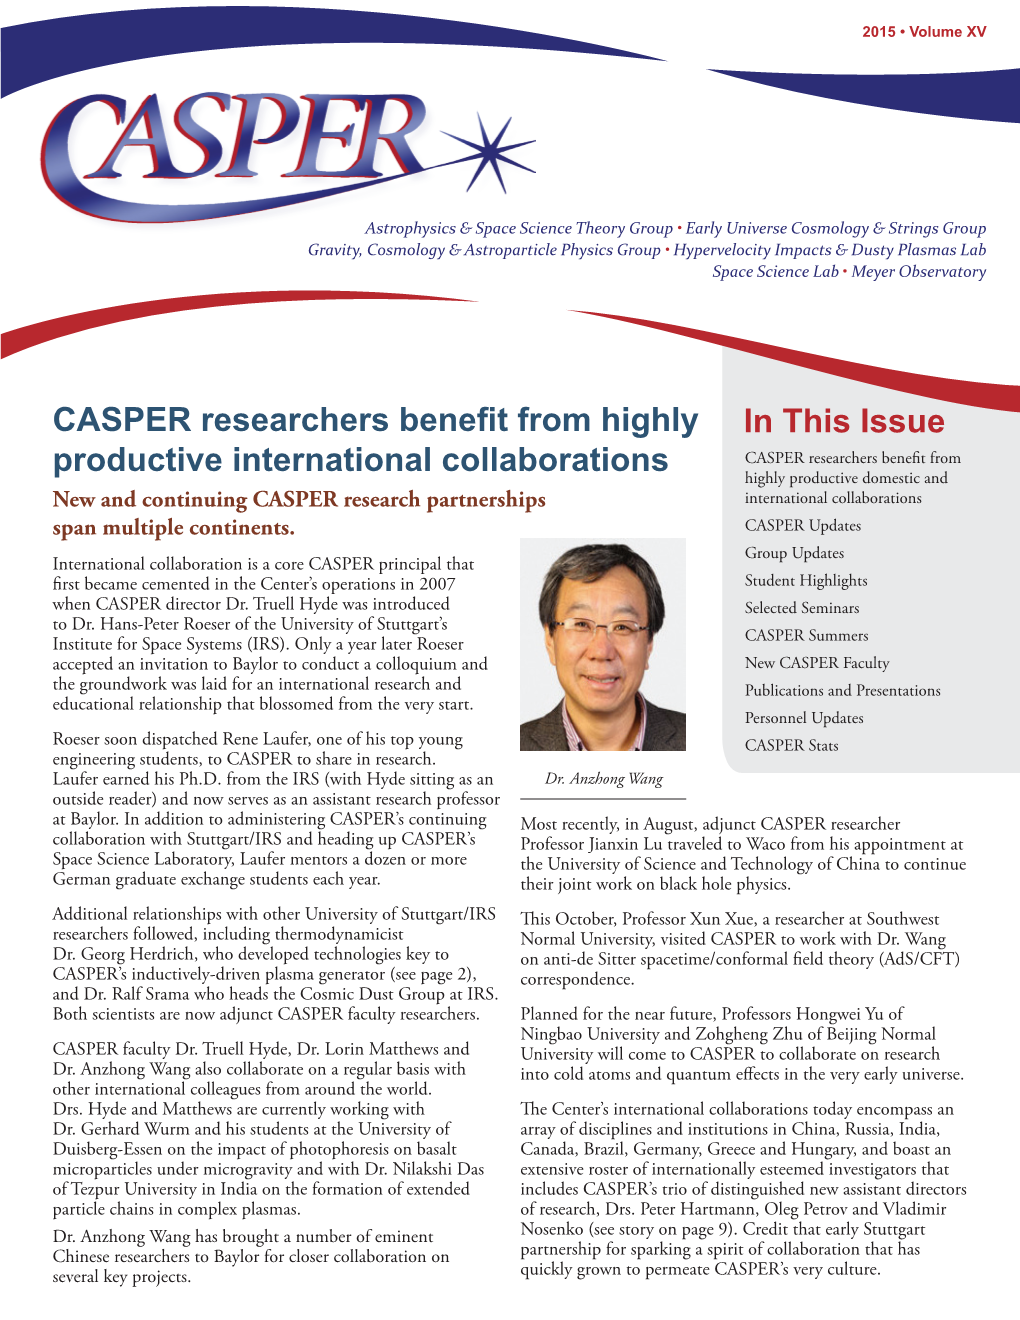 CASPER News 2015